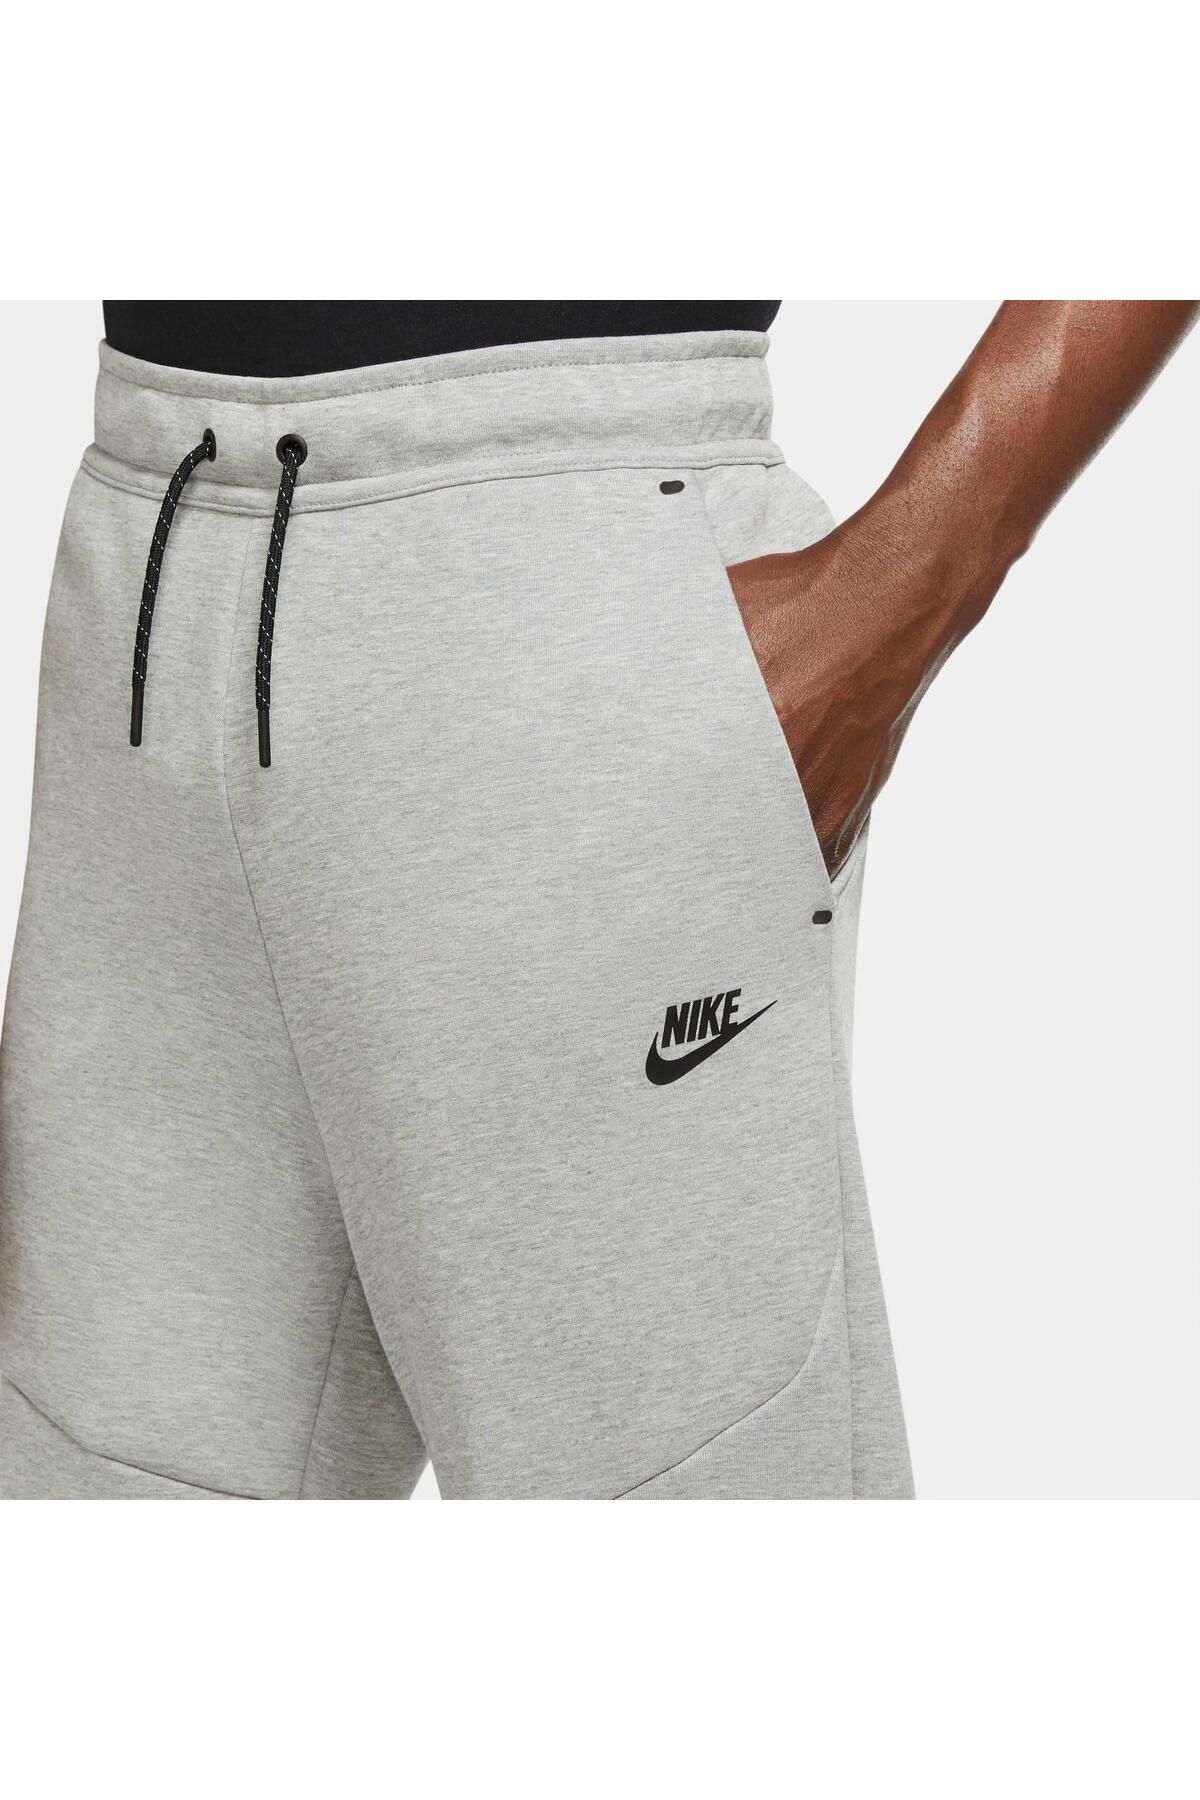 Nike Tech Fleece Joggers Pants Sweats Gray Cream CU4495-064 Men's L Large